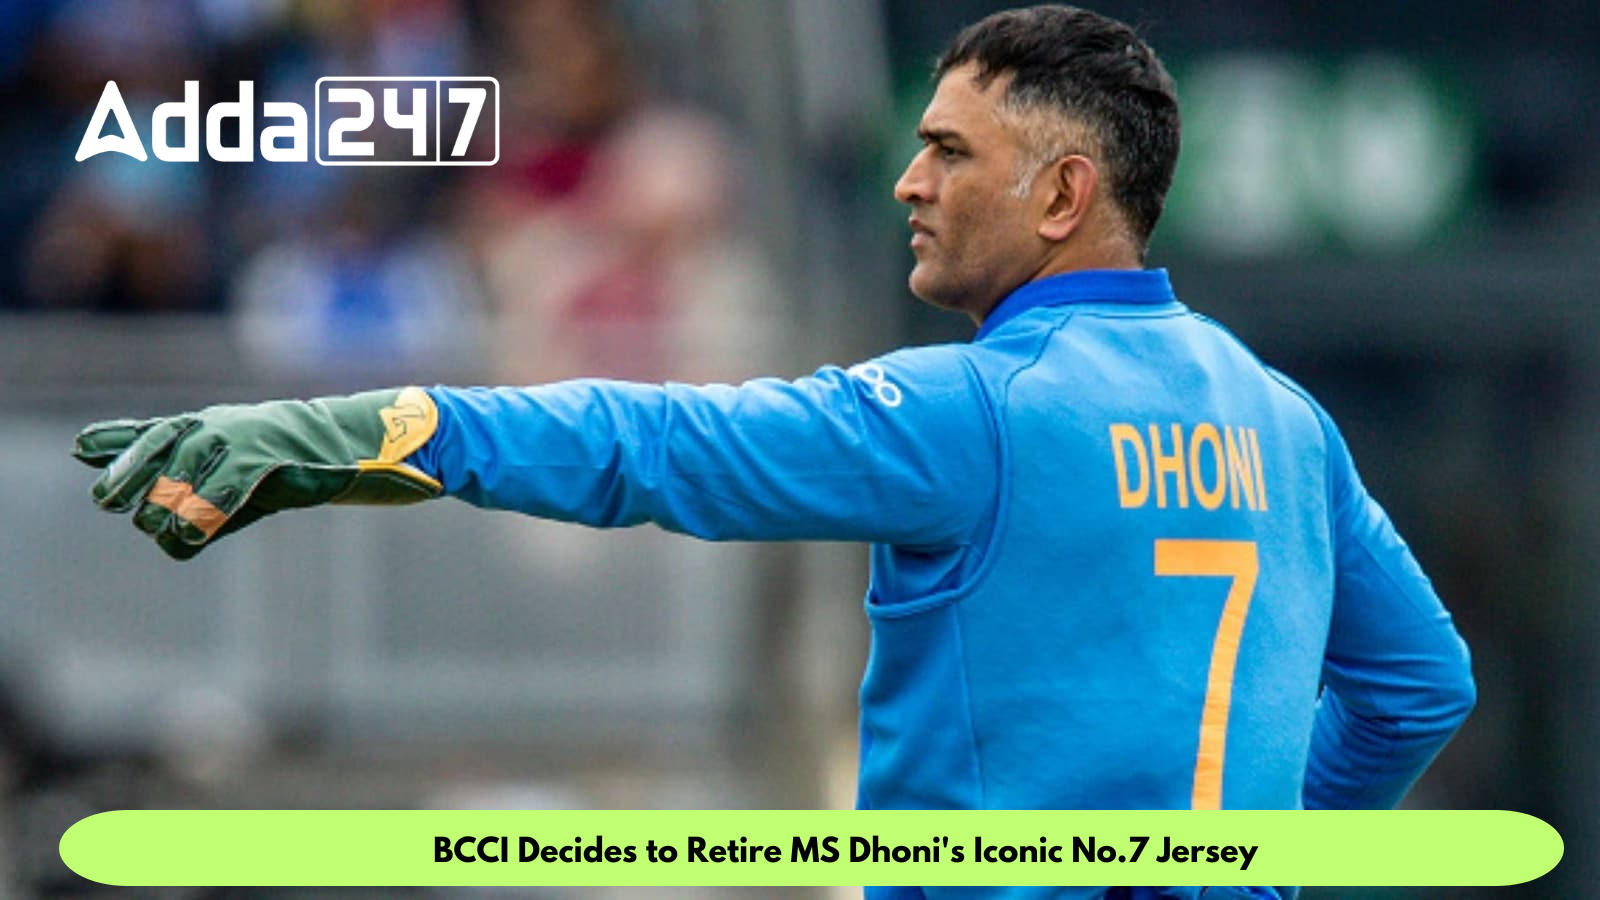 BCCI Decides to Retire MS Dhoni's Iconic No.7 Jersey